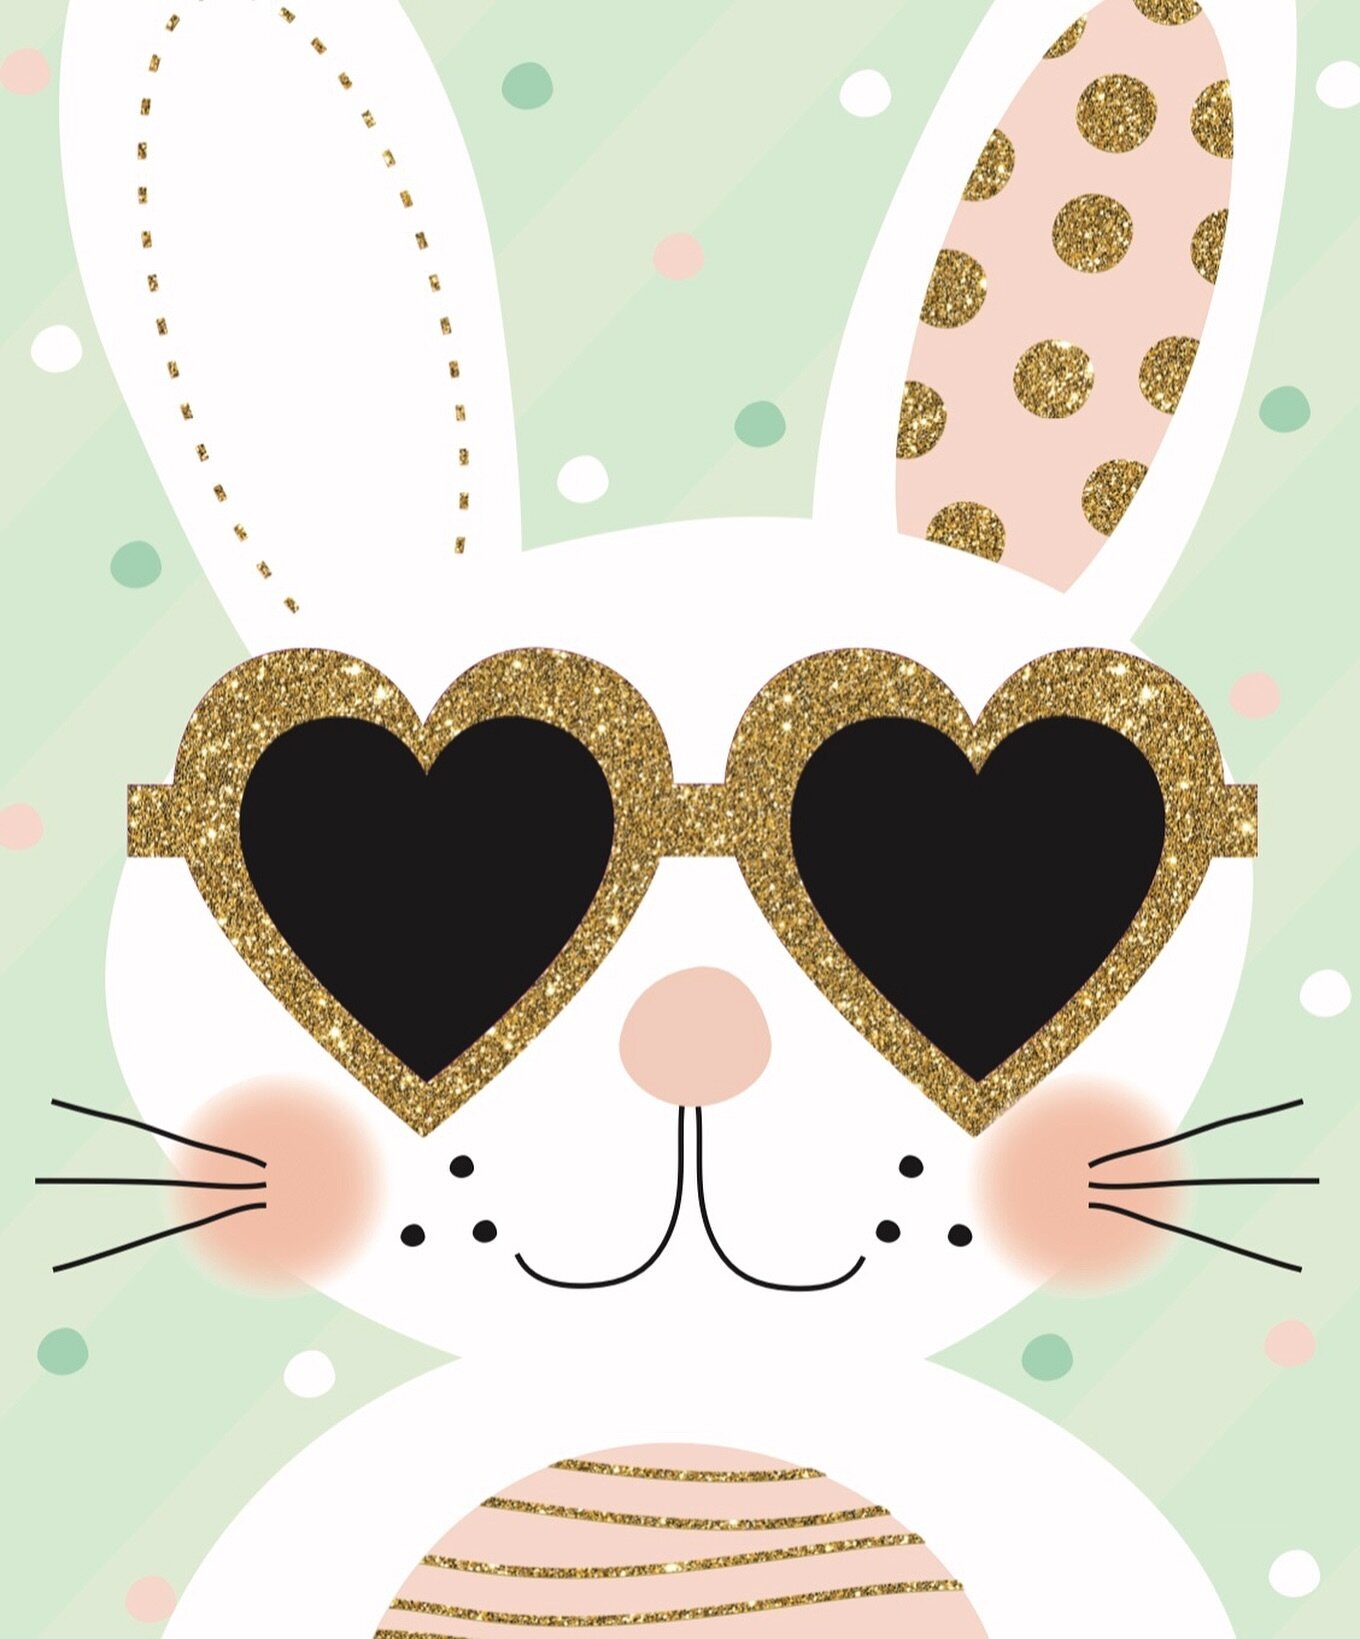 Happy Easter weekend little bunnies 🐰🌸